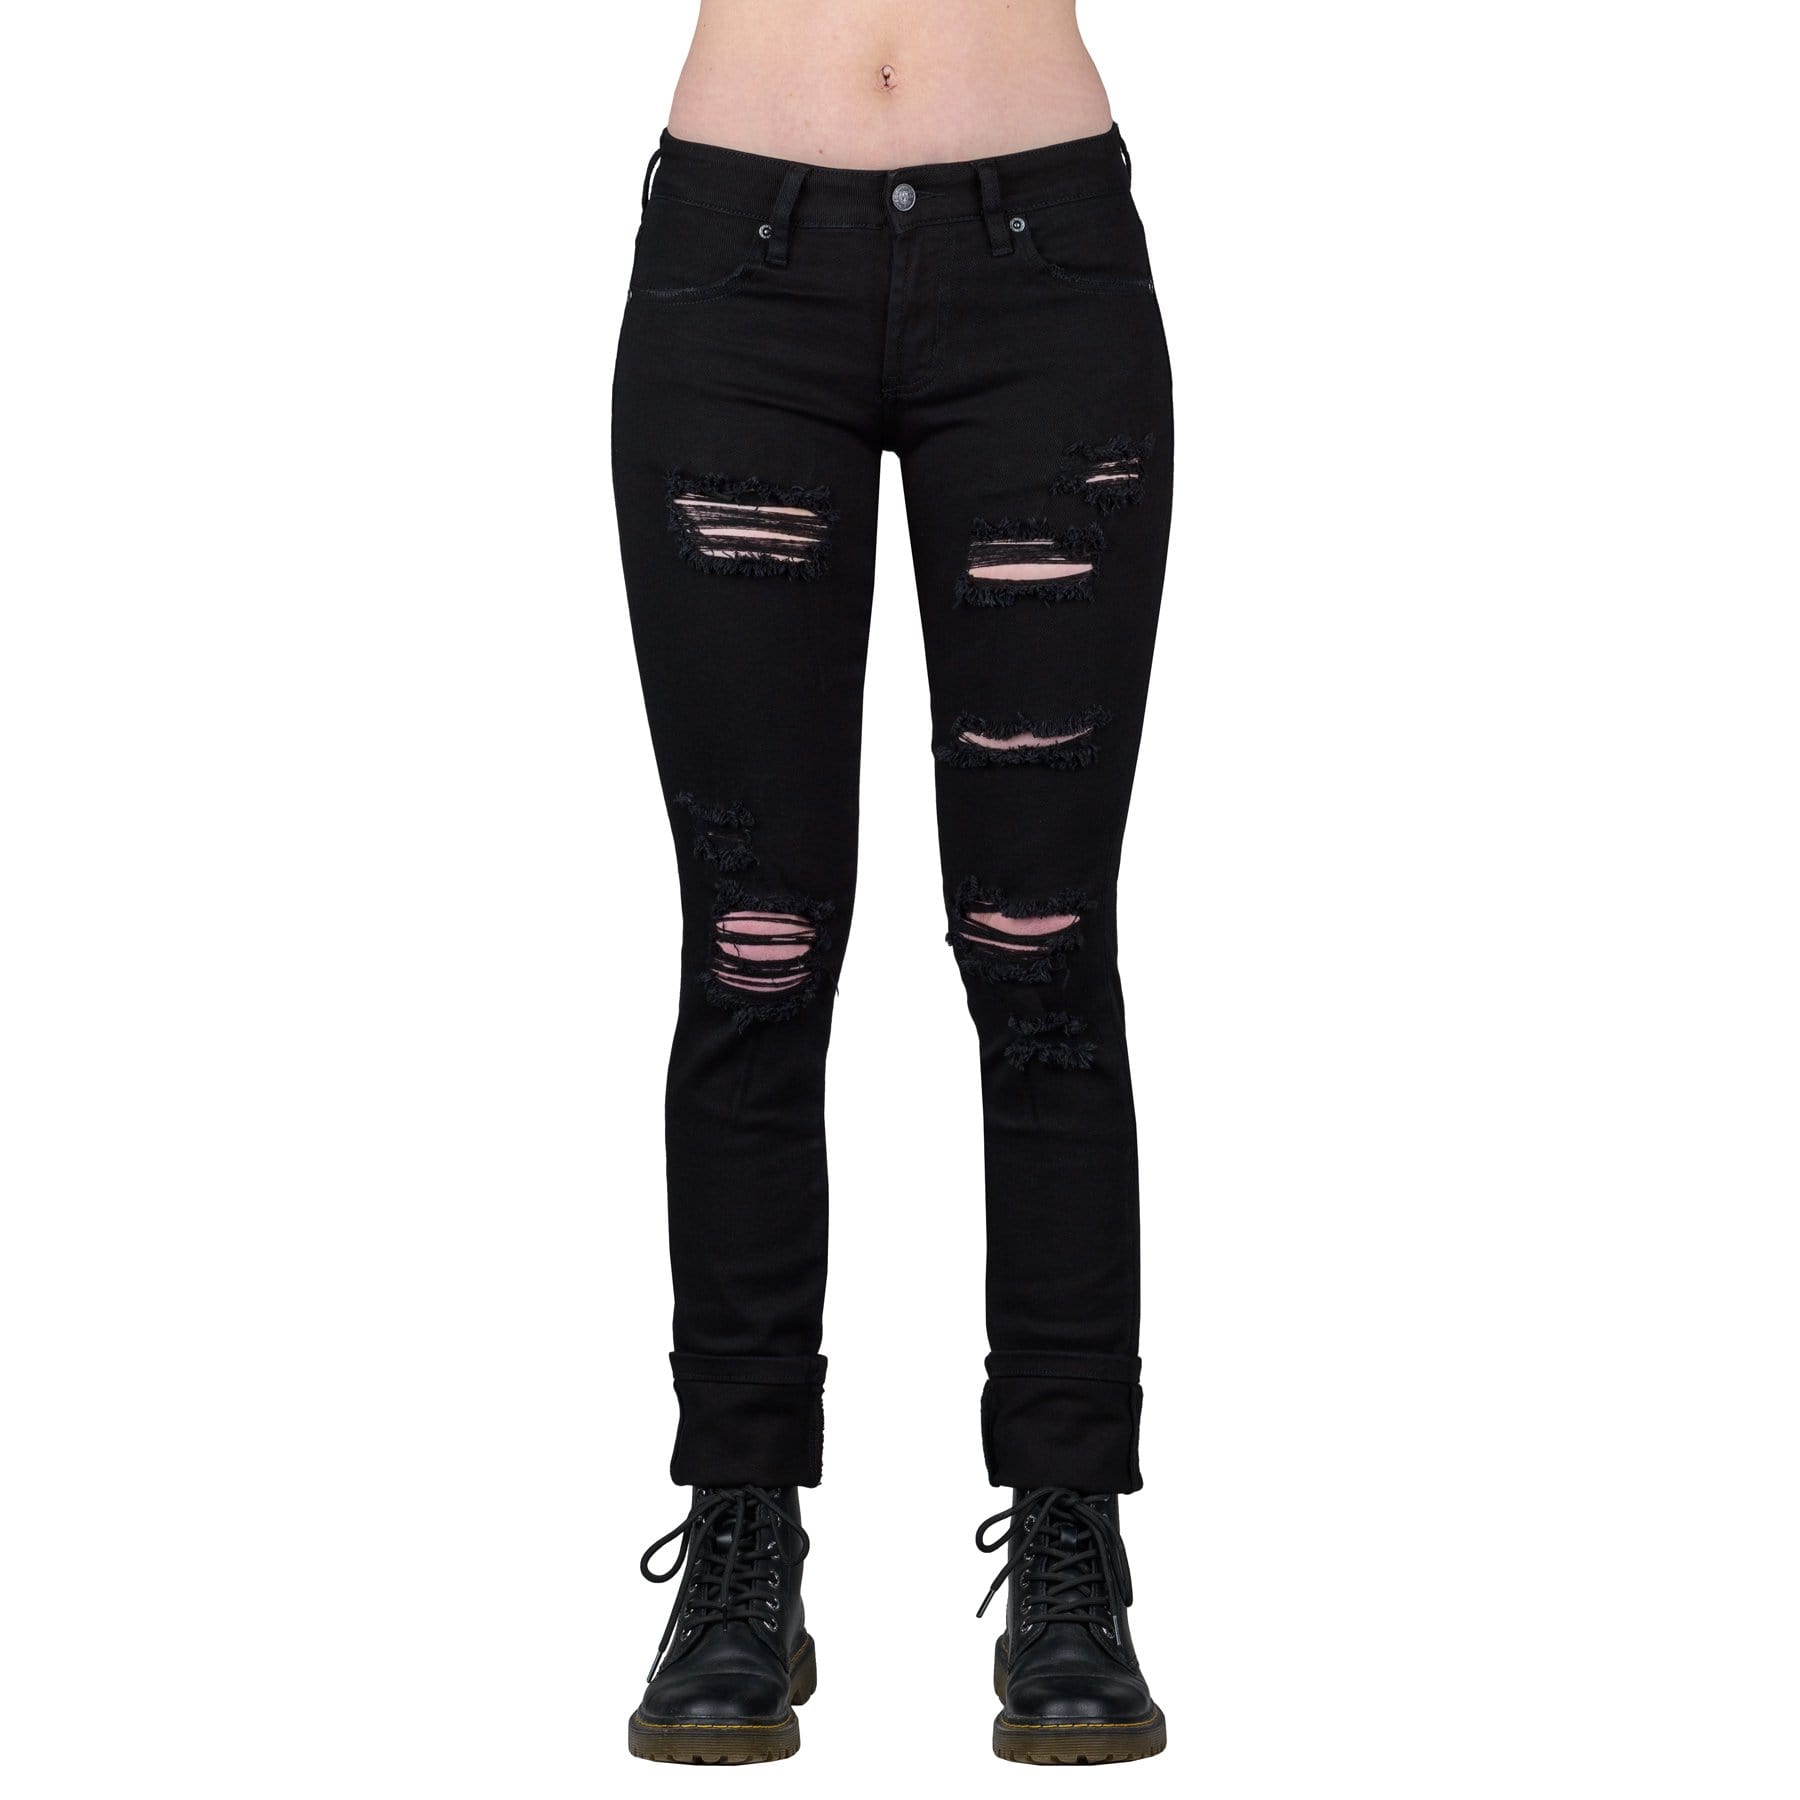 Wornstar Clothing Rampager Shredded Unisex Jeans - Black